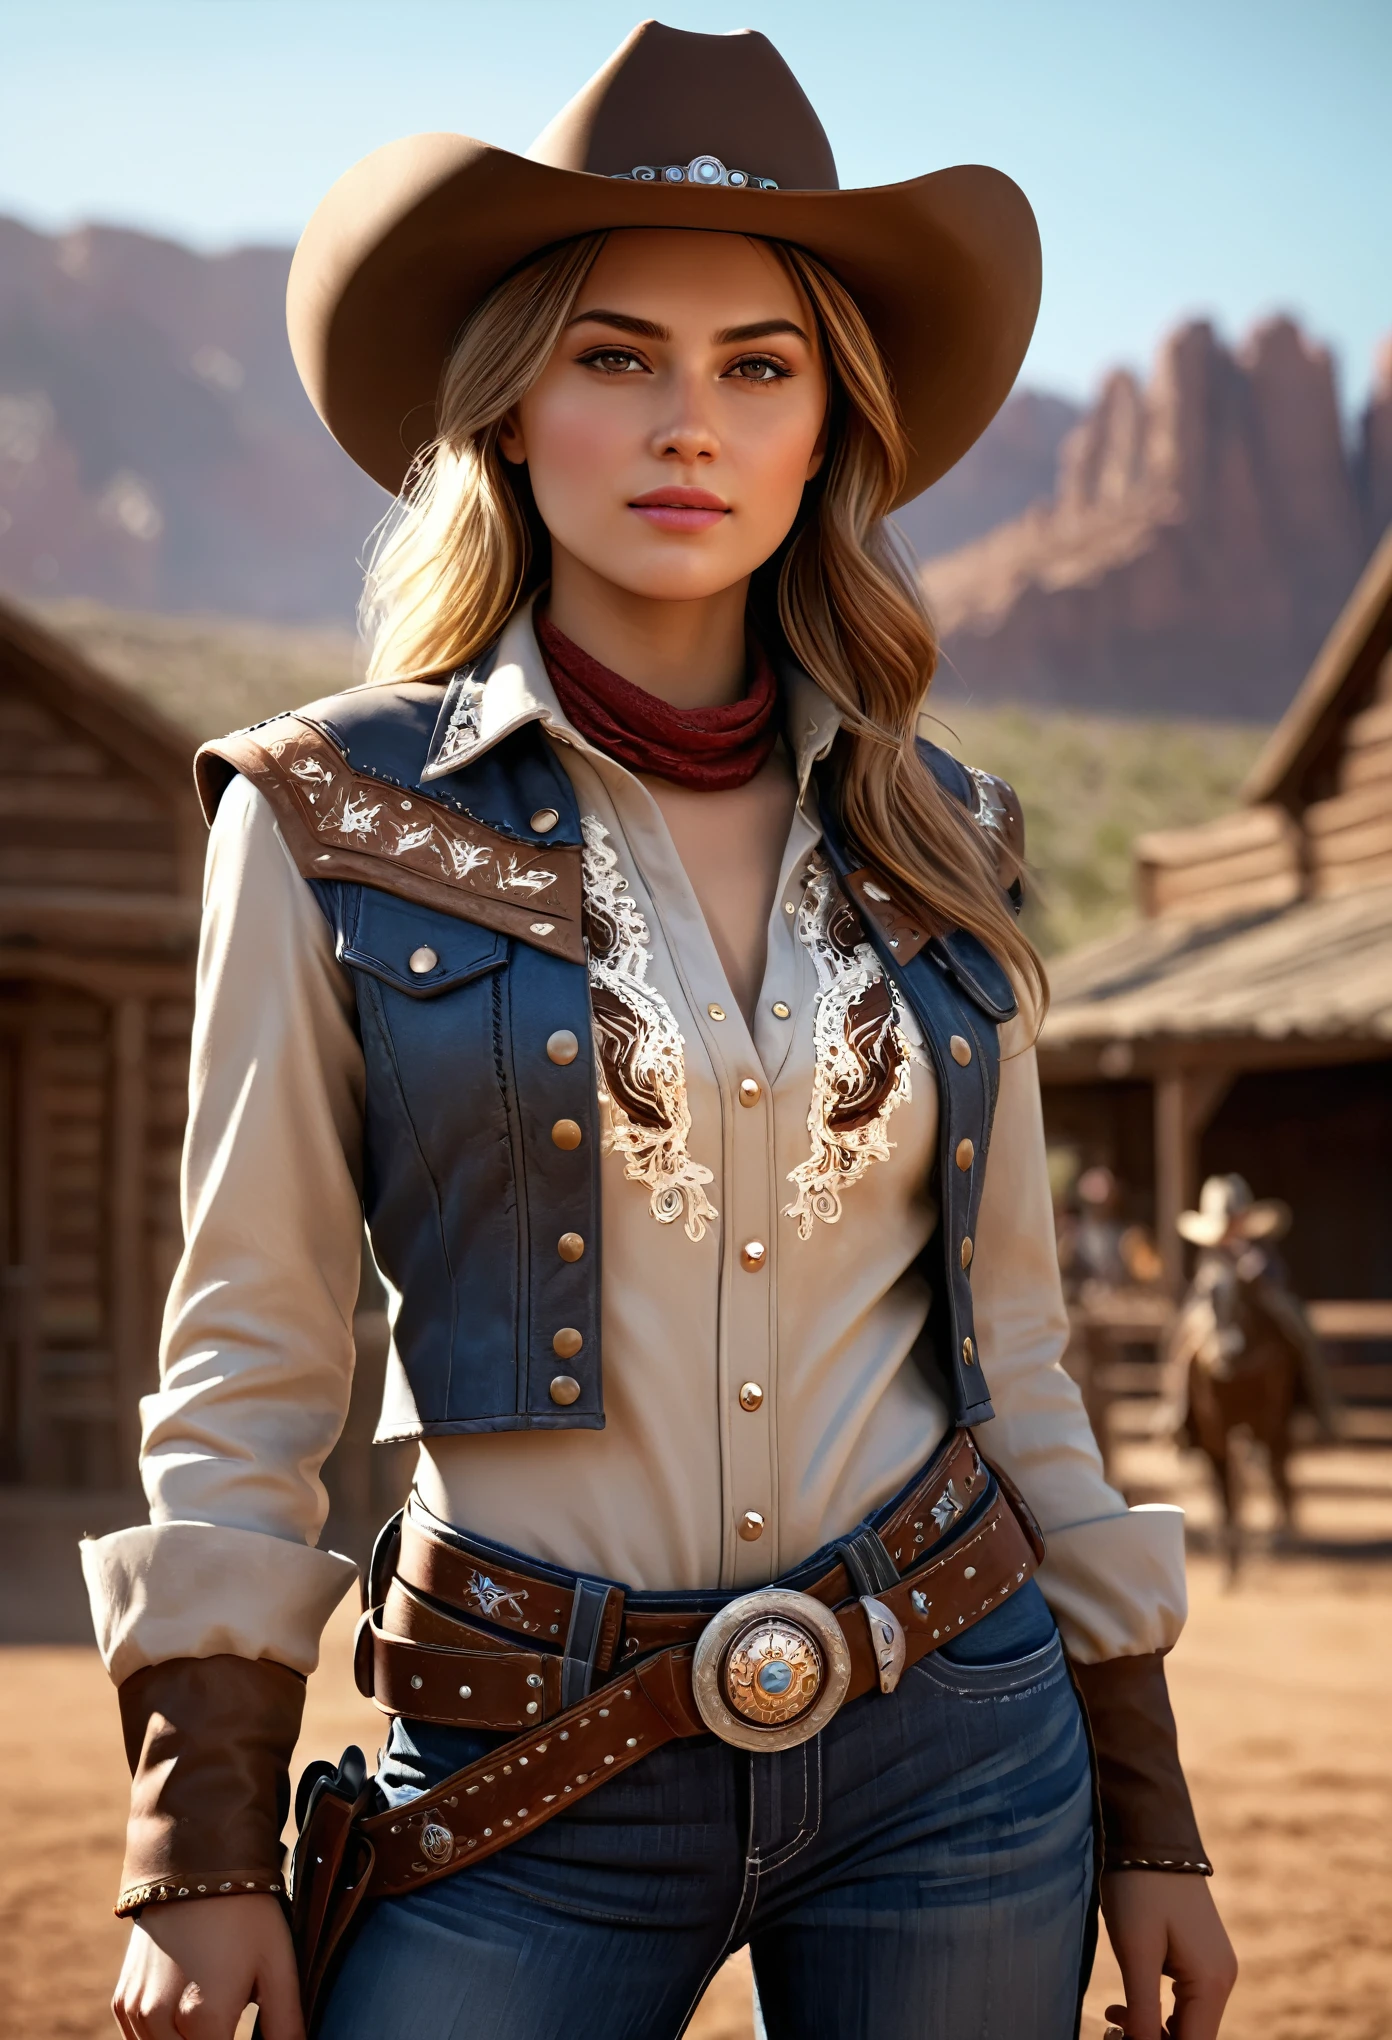 a beautiful young girl wearing a highly เหมือนจริง western cowgirl outfit, ศิลปะแฟนตาซี, photoเหมือนจริง, แสงแบบไดนามิก, อาร์ตสเตชั่น, ใบหน้าที่มีรายละเอียดมาก, 4เค, ได้รับรางวัล, (คุณภาพดีที่สุด,4เค,8k,ความสูง,ผลงานชิ้นเอก:1.2),มีรายละเอียดมาก,(เหมือนจริง,photoเหมือนจริง,photo-เหมือนจริง:1.37),รายละเอียดที่ซับซ้อน,ท่าทางที่น่าทึ่ง,องค์ประกอบภาพยนตร์,สีสันสดใส,โทนสีผิวธรรมชาติ,ไฮไลท์ที่เร่าร้อน,แสงบรรยากาศ,ความชัดลึก,แสงปริมาตร